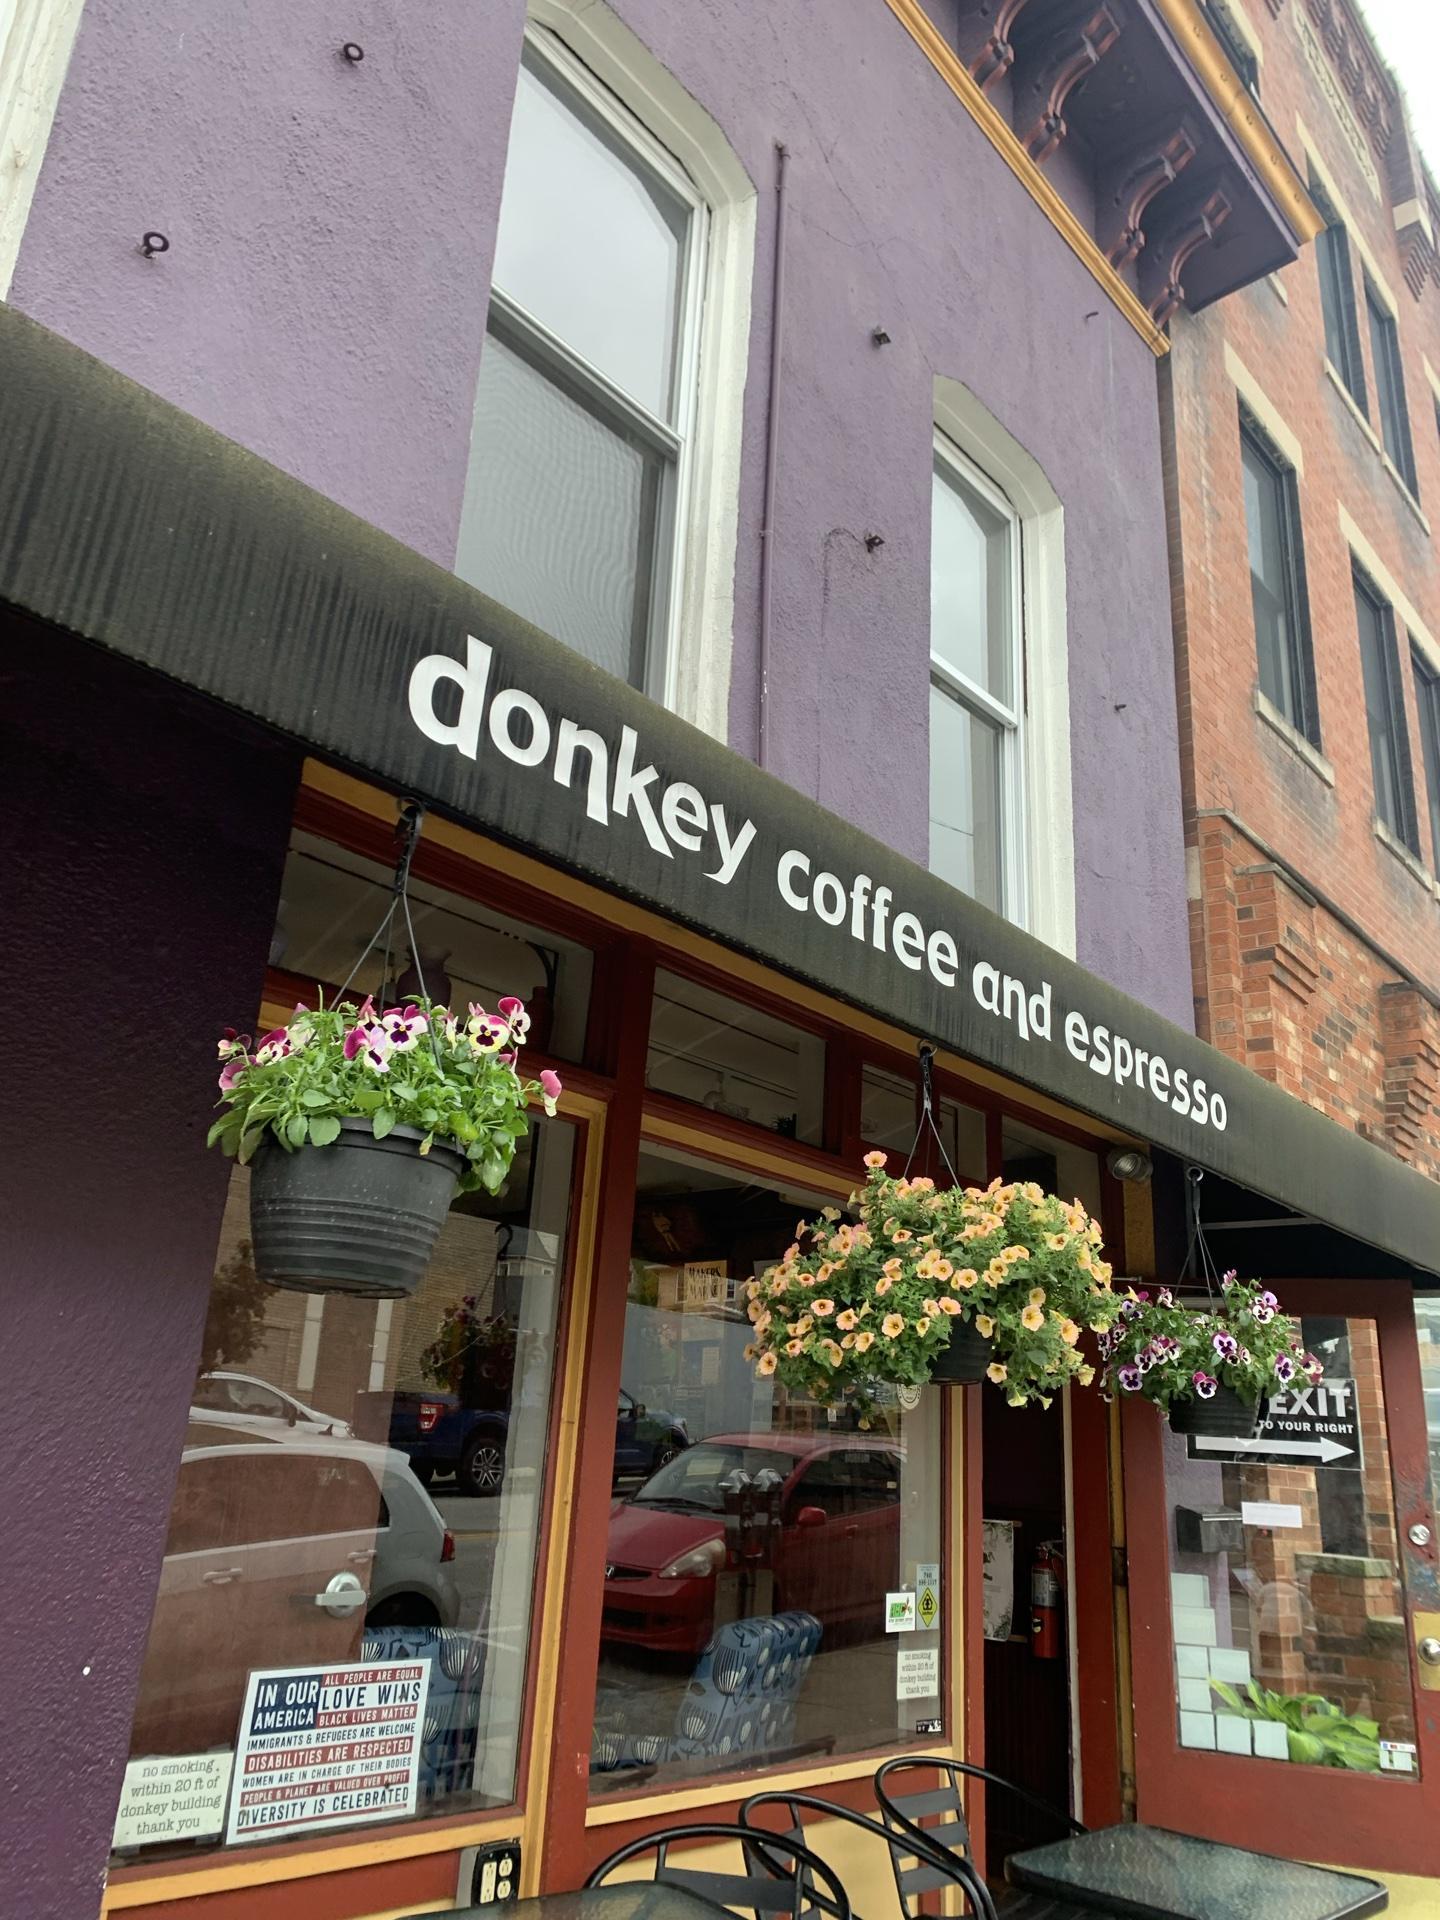 Pet Friendly Donkey Coffee